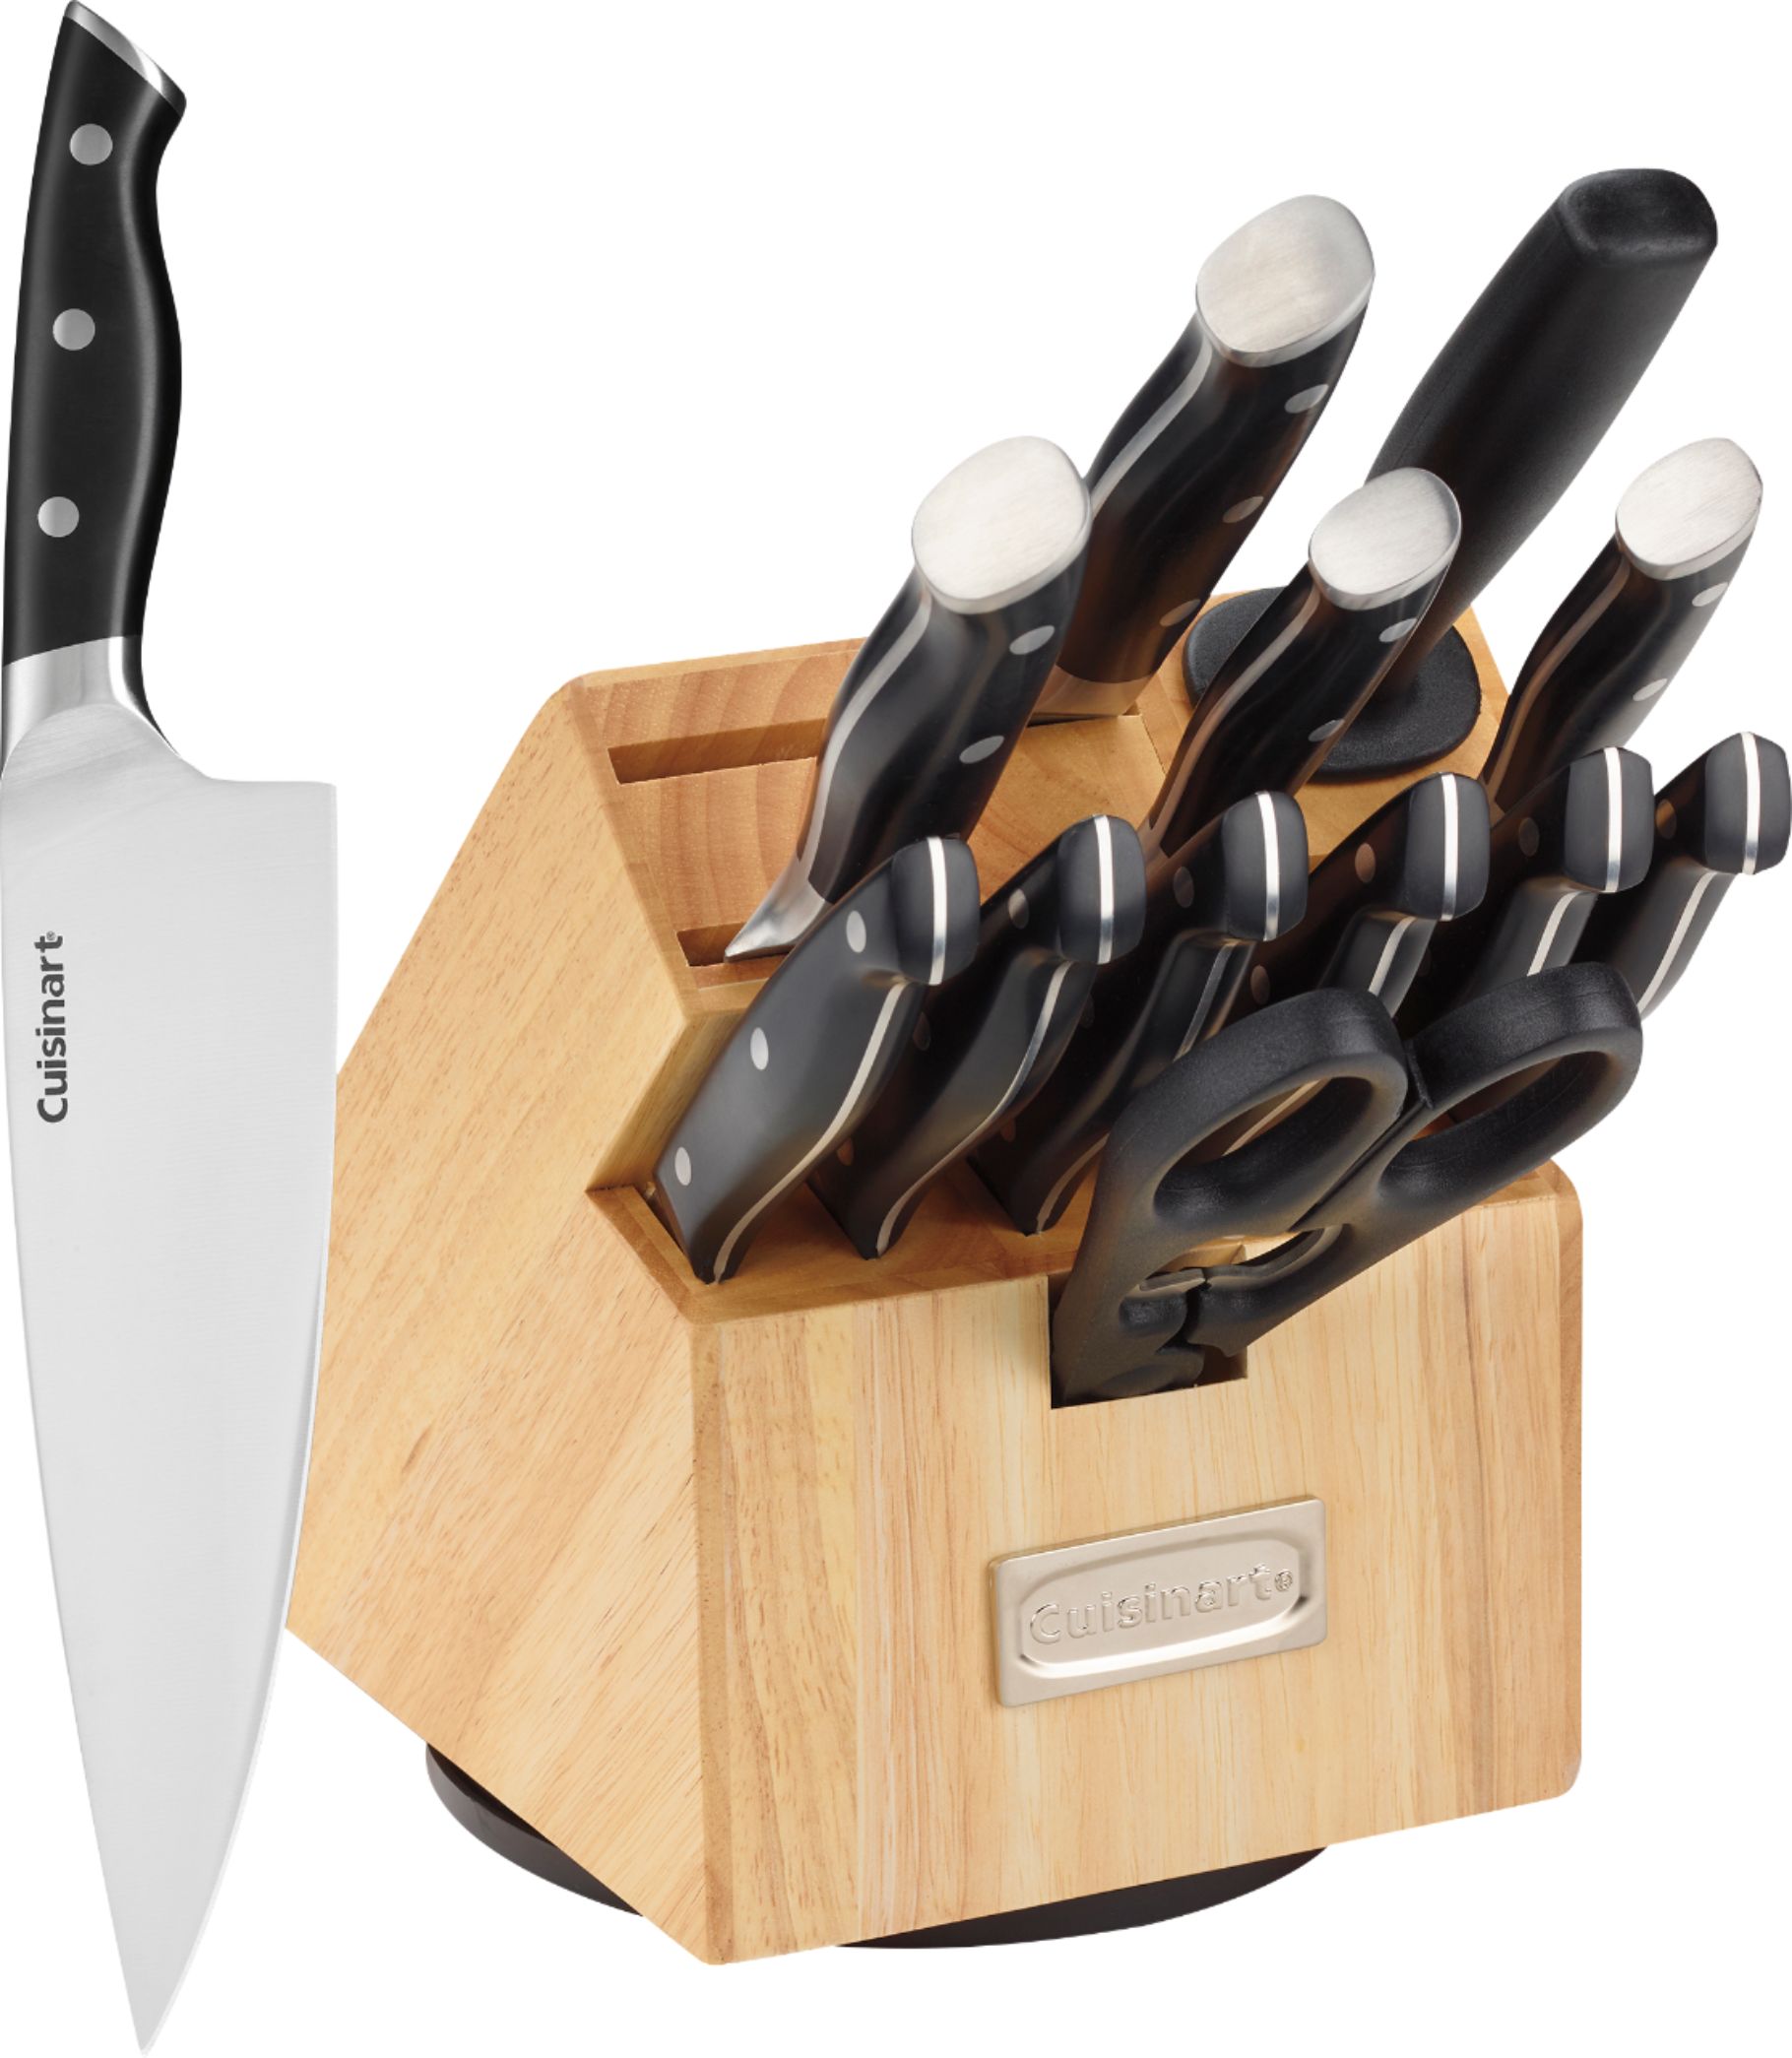 Cuisinart Classic 15-Piece Knife Set Stainless Steel C77TRR-15P - Best Buy Cuisinart Stainless Steel Knife Set